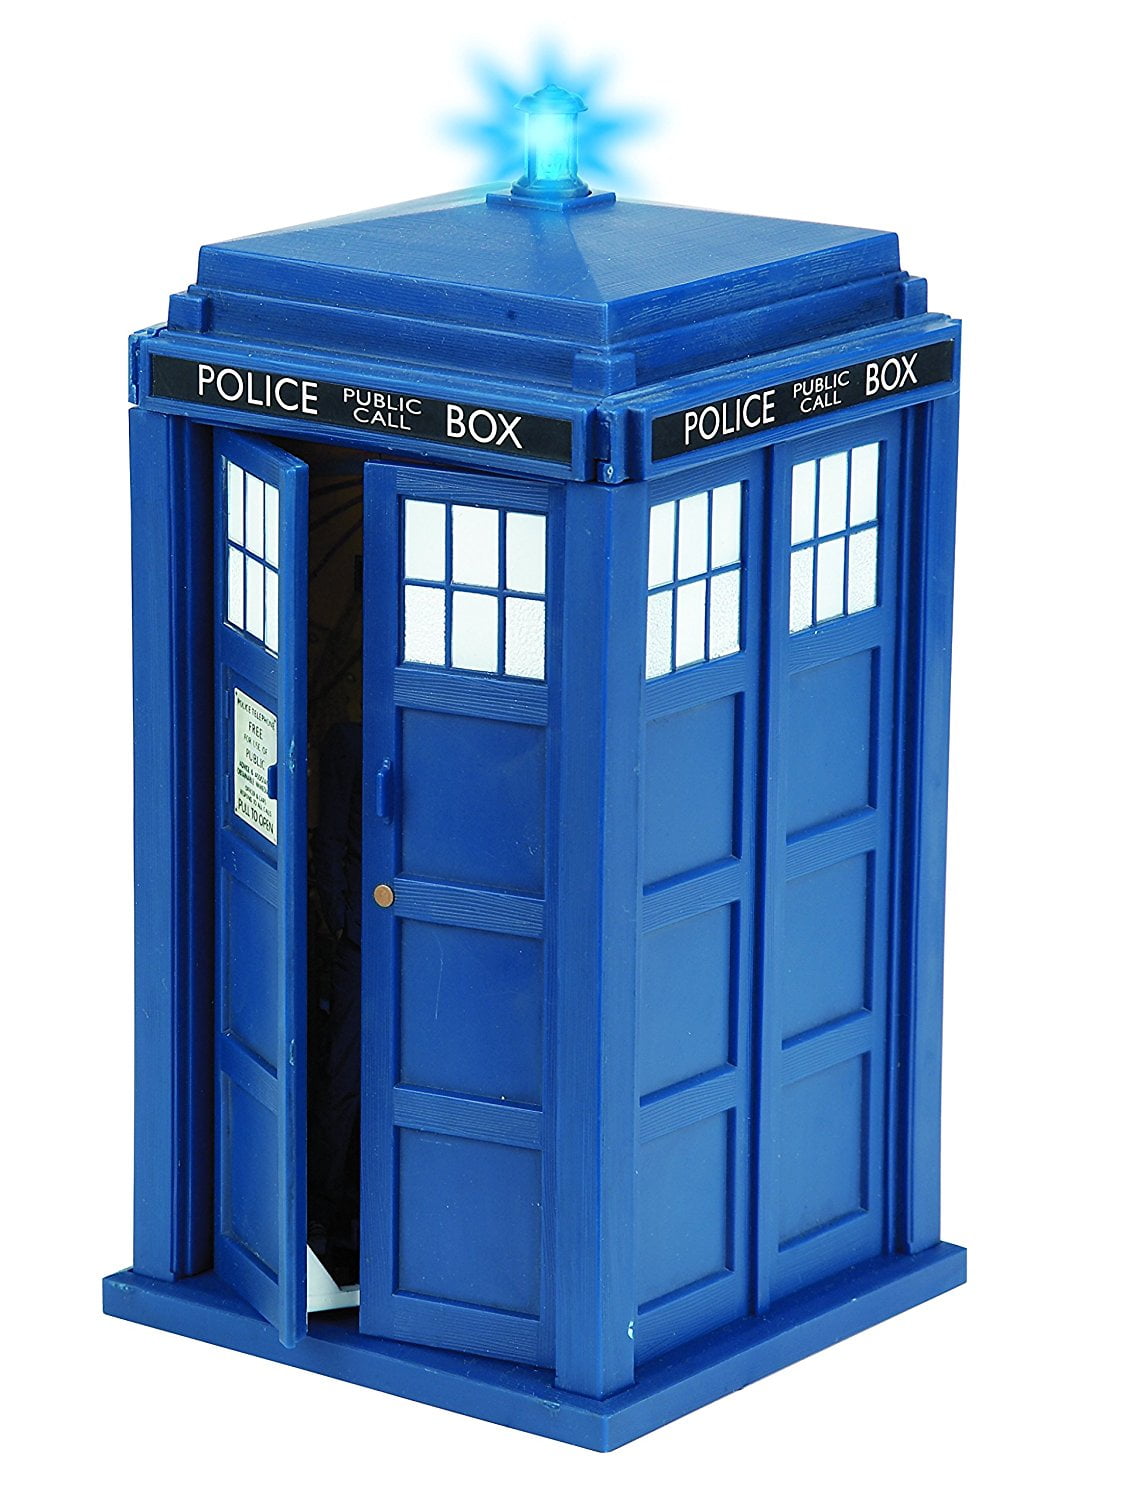 Doctor Who Electronic TARDIS Talking Money BankDamaged Box 